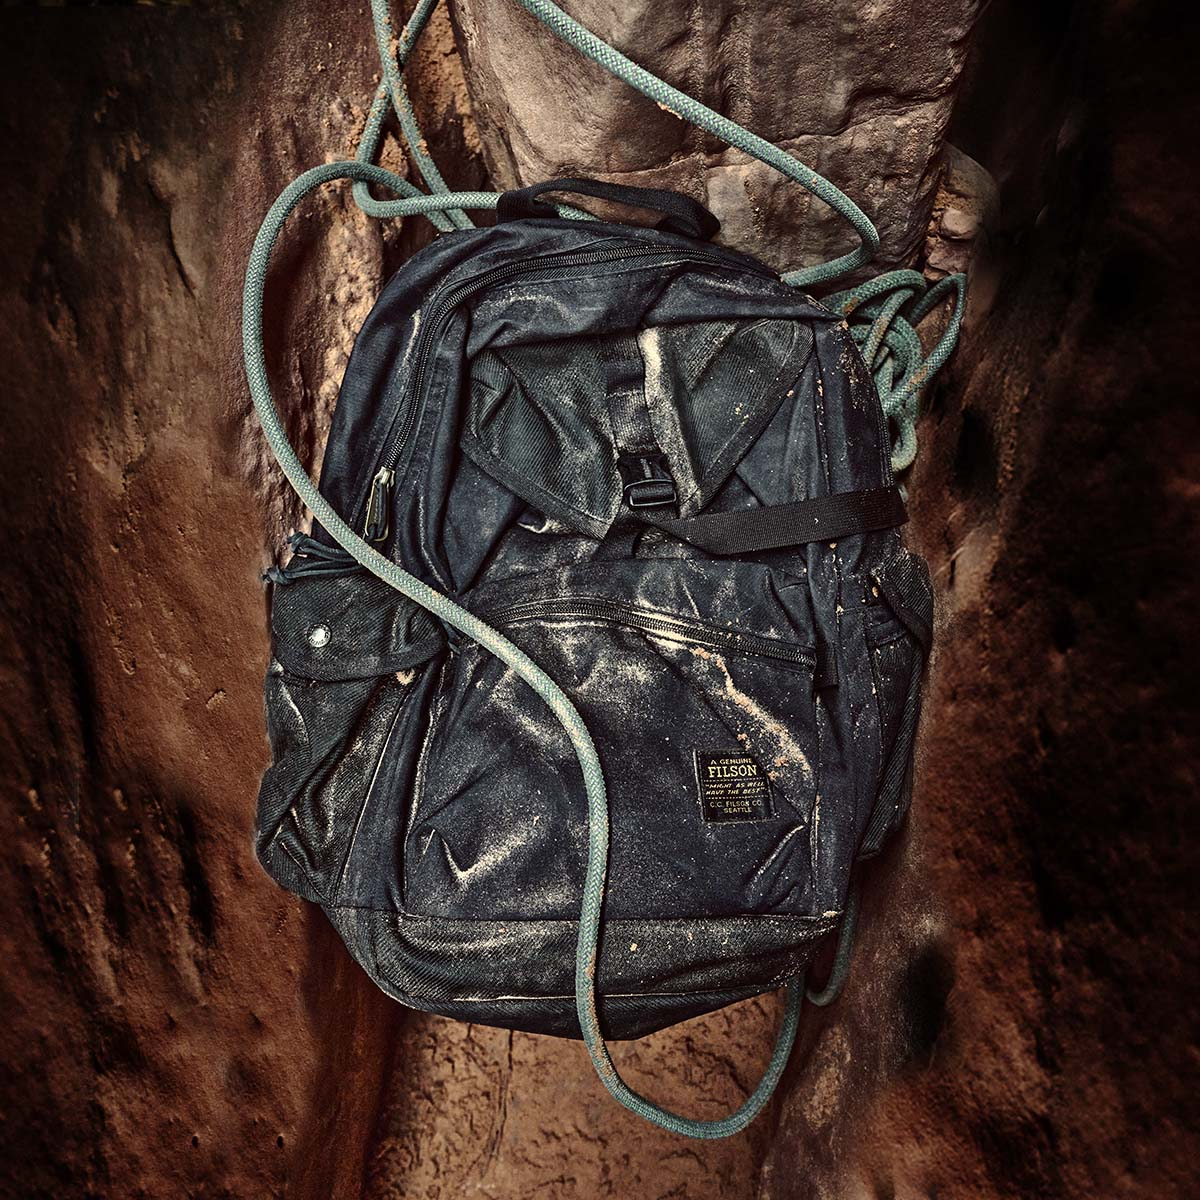 Filson Surveyor 36L Backpack Black, duurzame en veelzijdige rugzak die bestand is tegen intensief gebruik